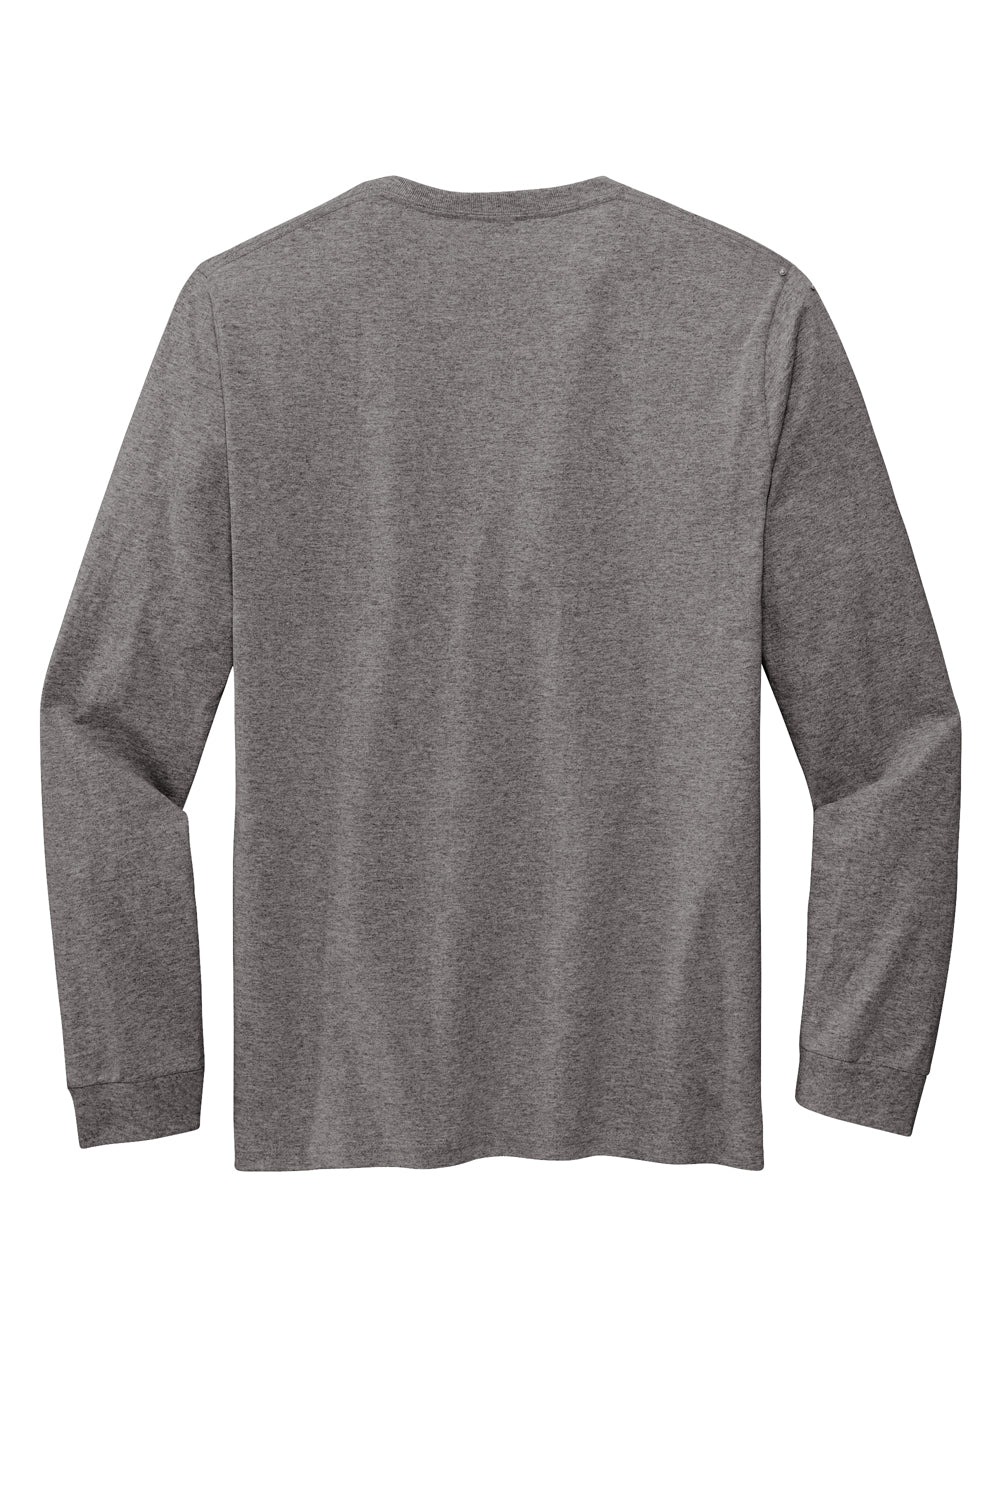 Volunteer Knitwear VL60LS Chore Long Sleeve Crewneck T-Shirt Heather Dark Grey Flat Back